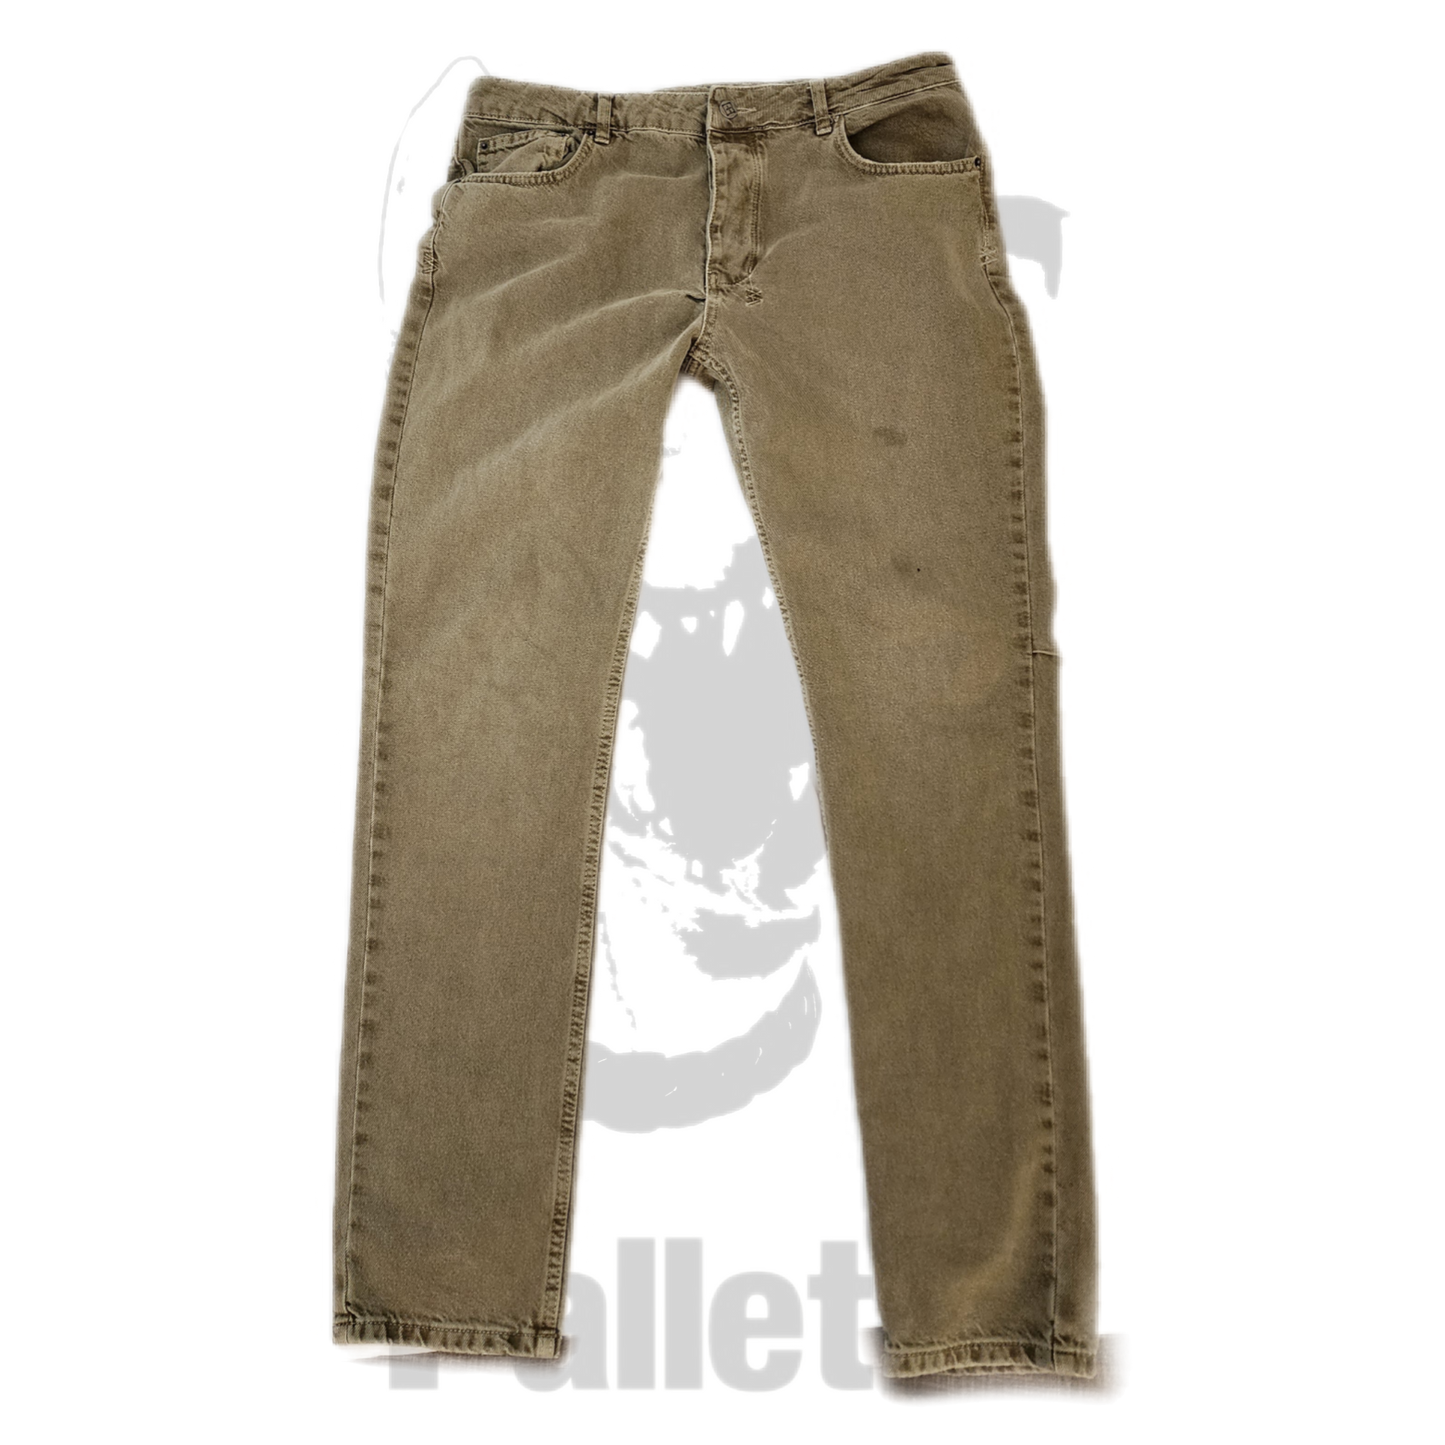 Ksbui - "Brown Jeans" - Size 36